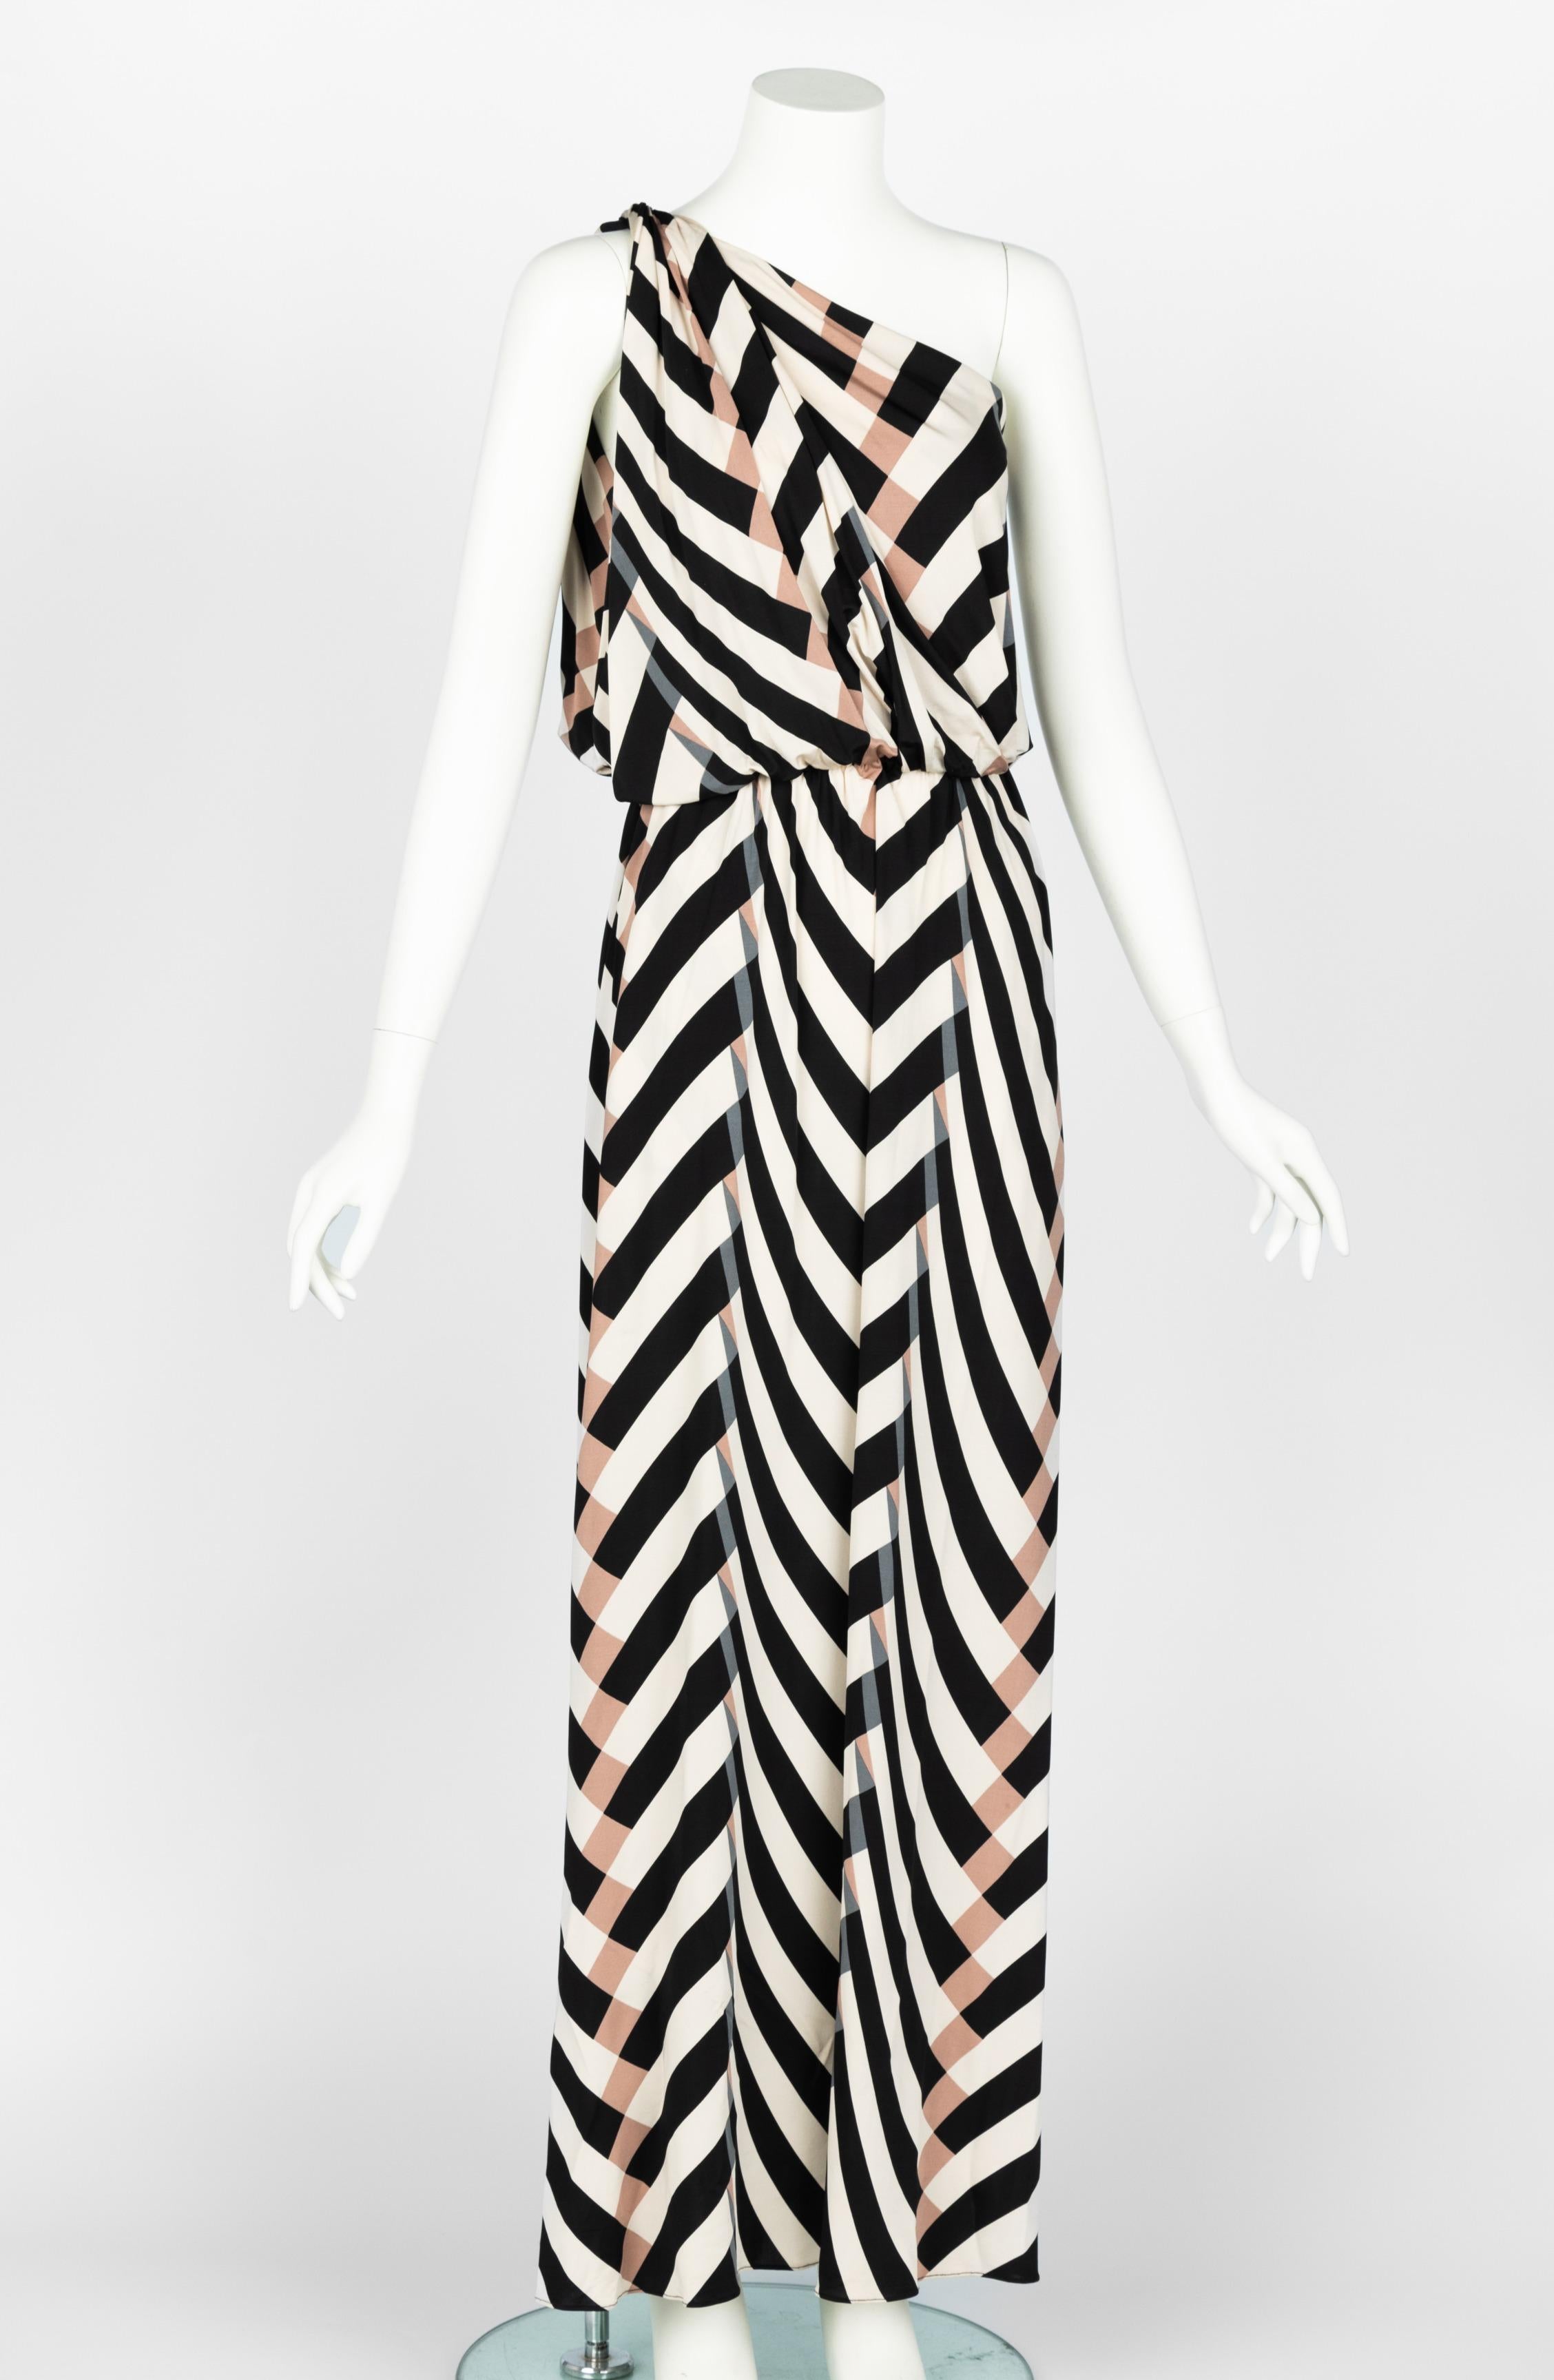 Lanvin  Alber Elbaz Spring 2015 One Shoulder Chevron Striped Jersey Dress In Excellent Condition For Sale In Boca Raton, FL